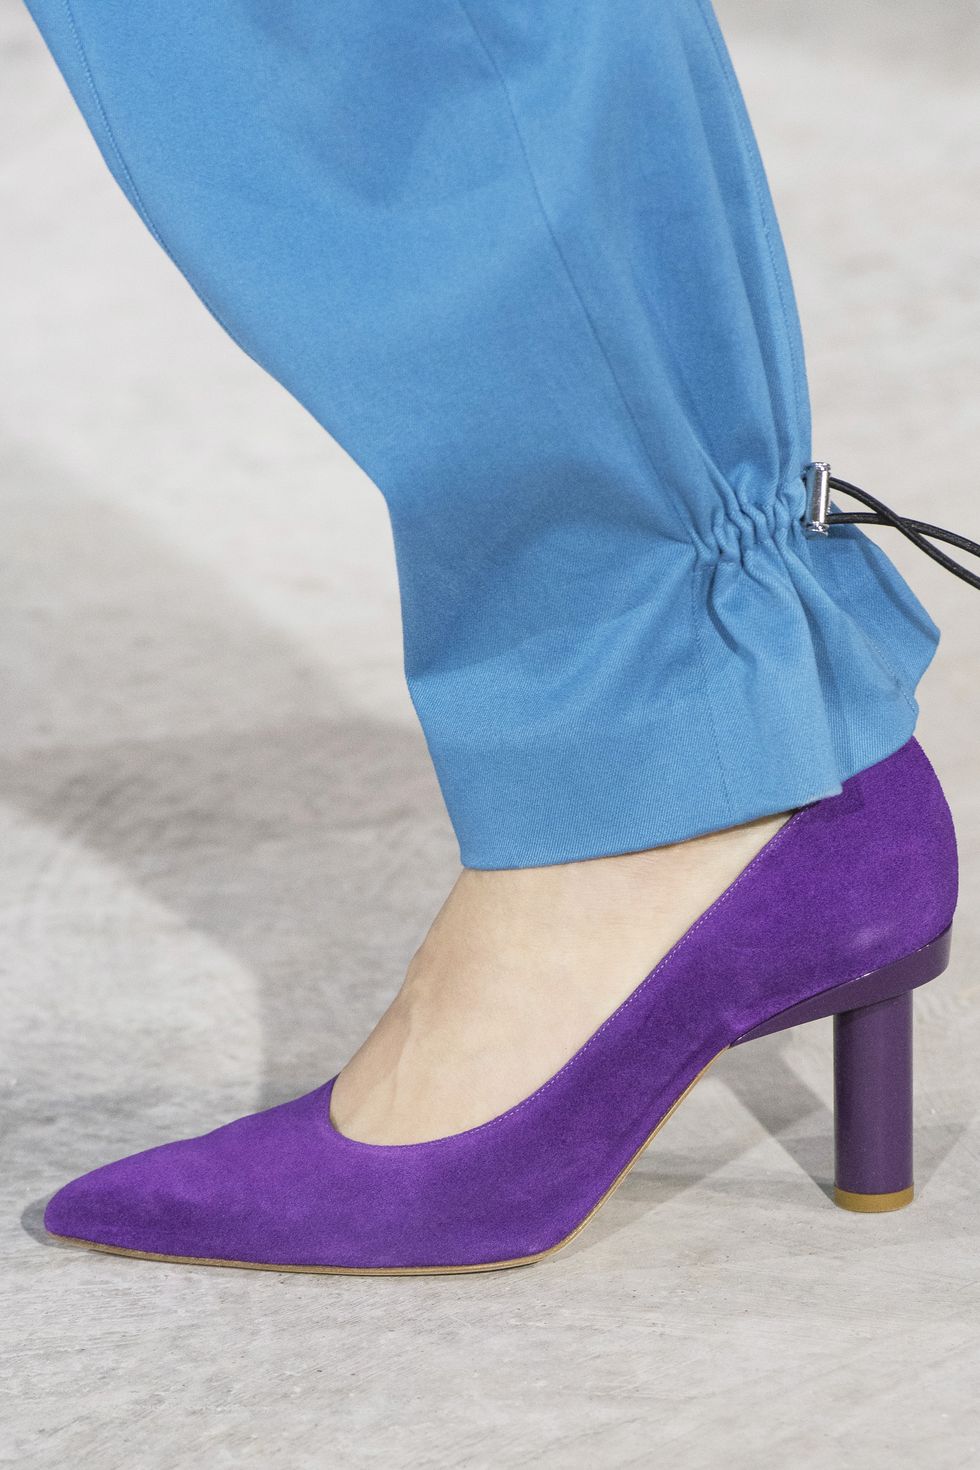 Footwear, Purple, Blue, High heels, Violet, Shoe, Electric blue, Lilac, Cobalt blue, Pink, 